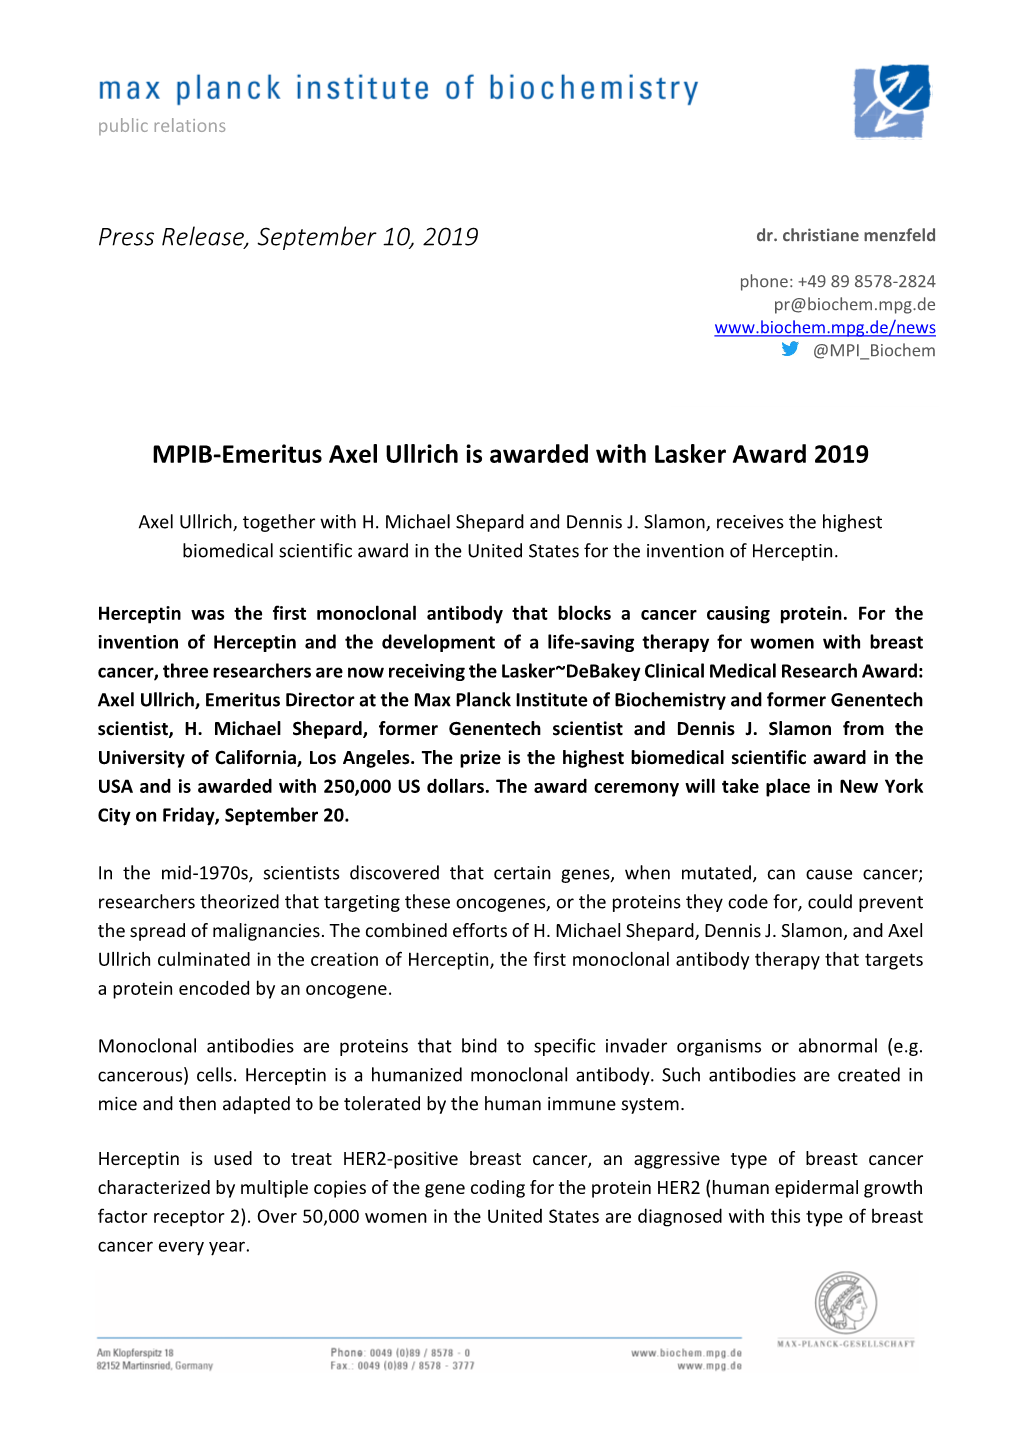 Press Release, September 10, 2019 MPIB-Emeritus Axel Ullrich Is